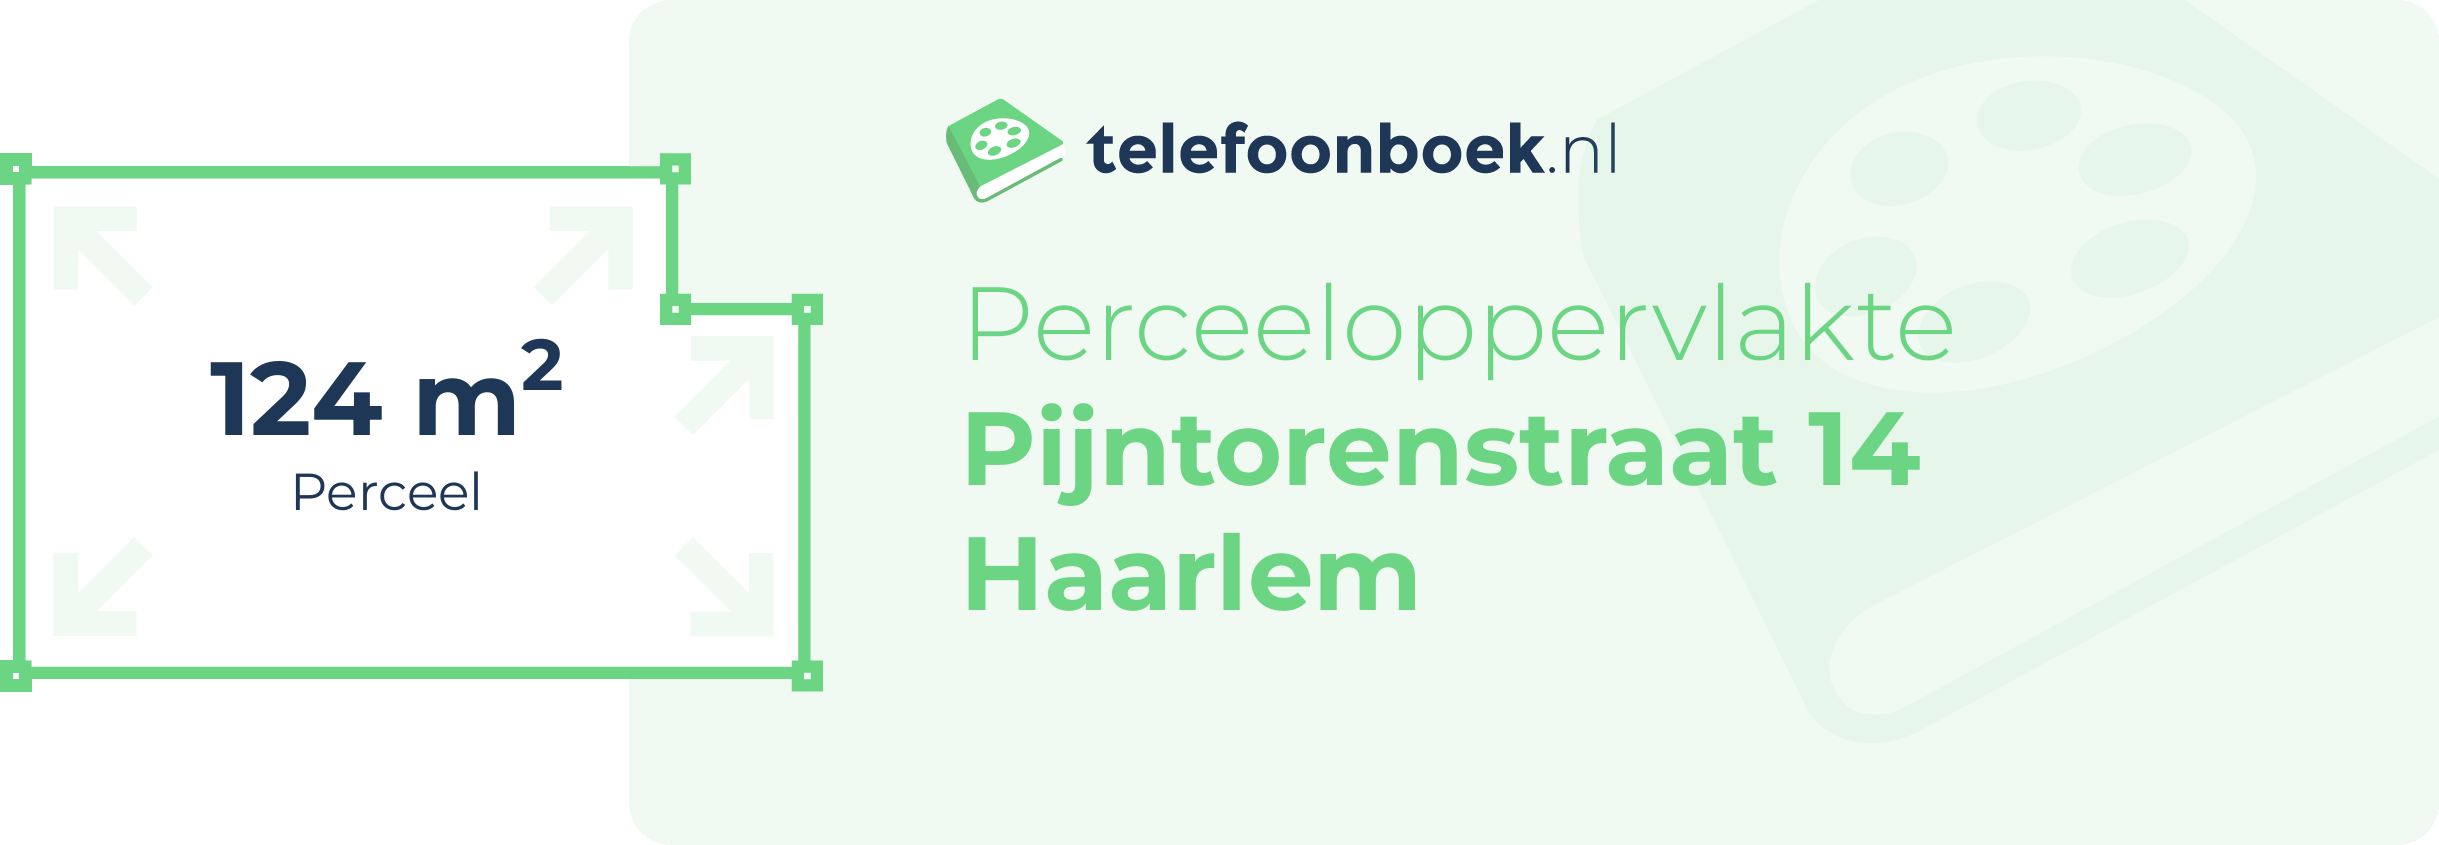 Perceeloppervlakte Pijntorenstraat 14 Haarlem